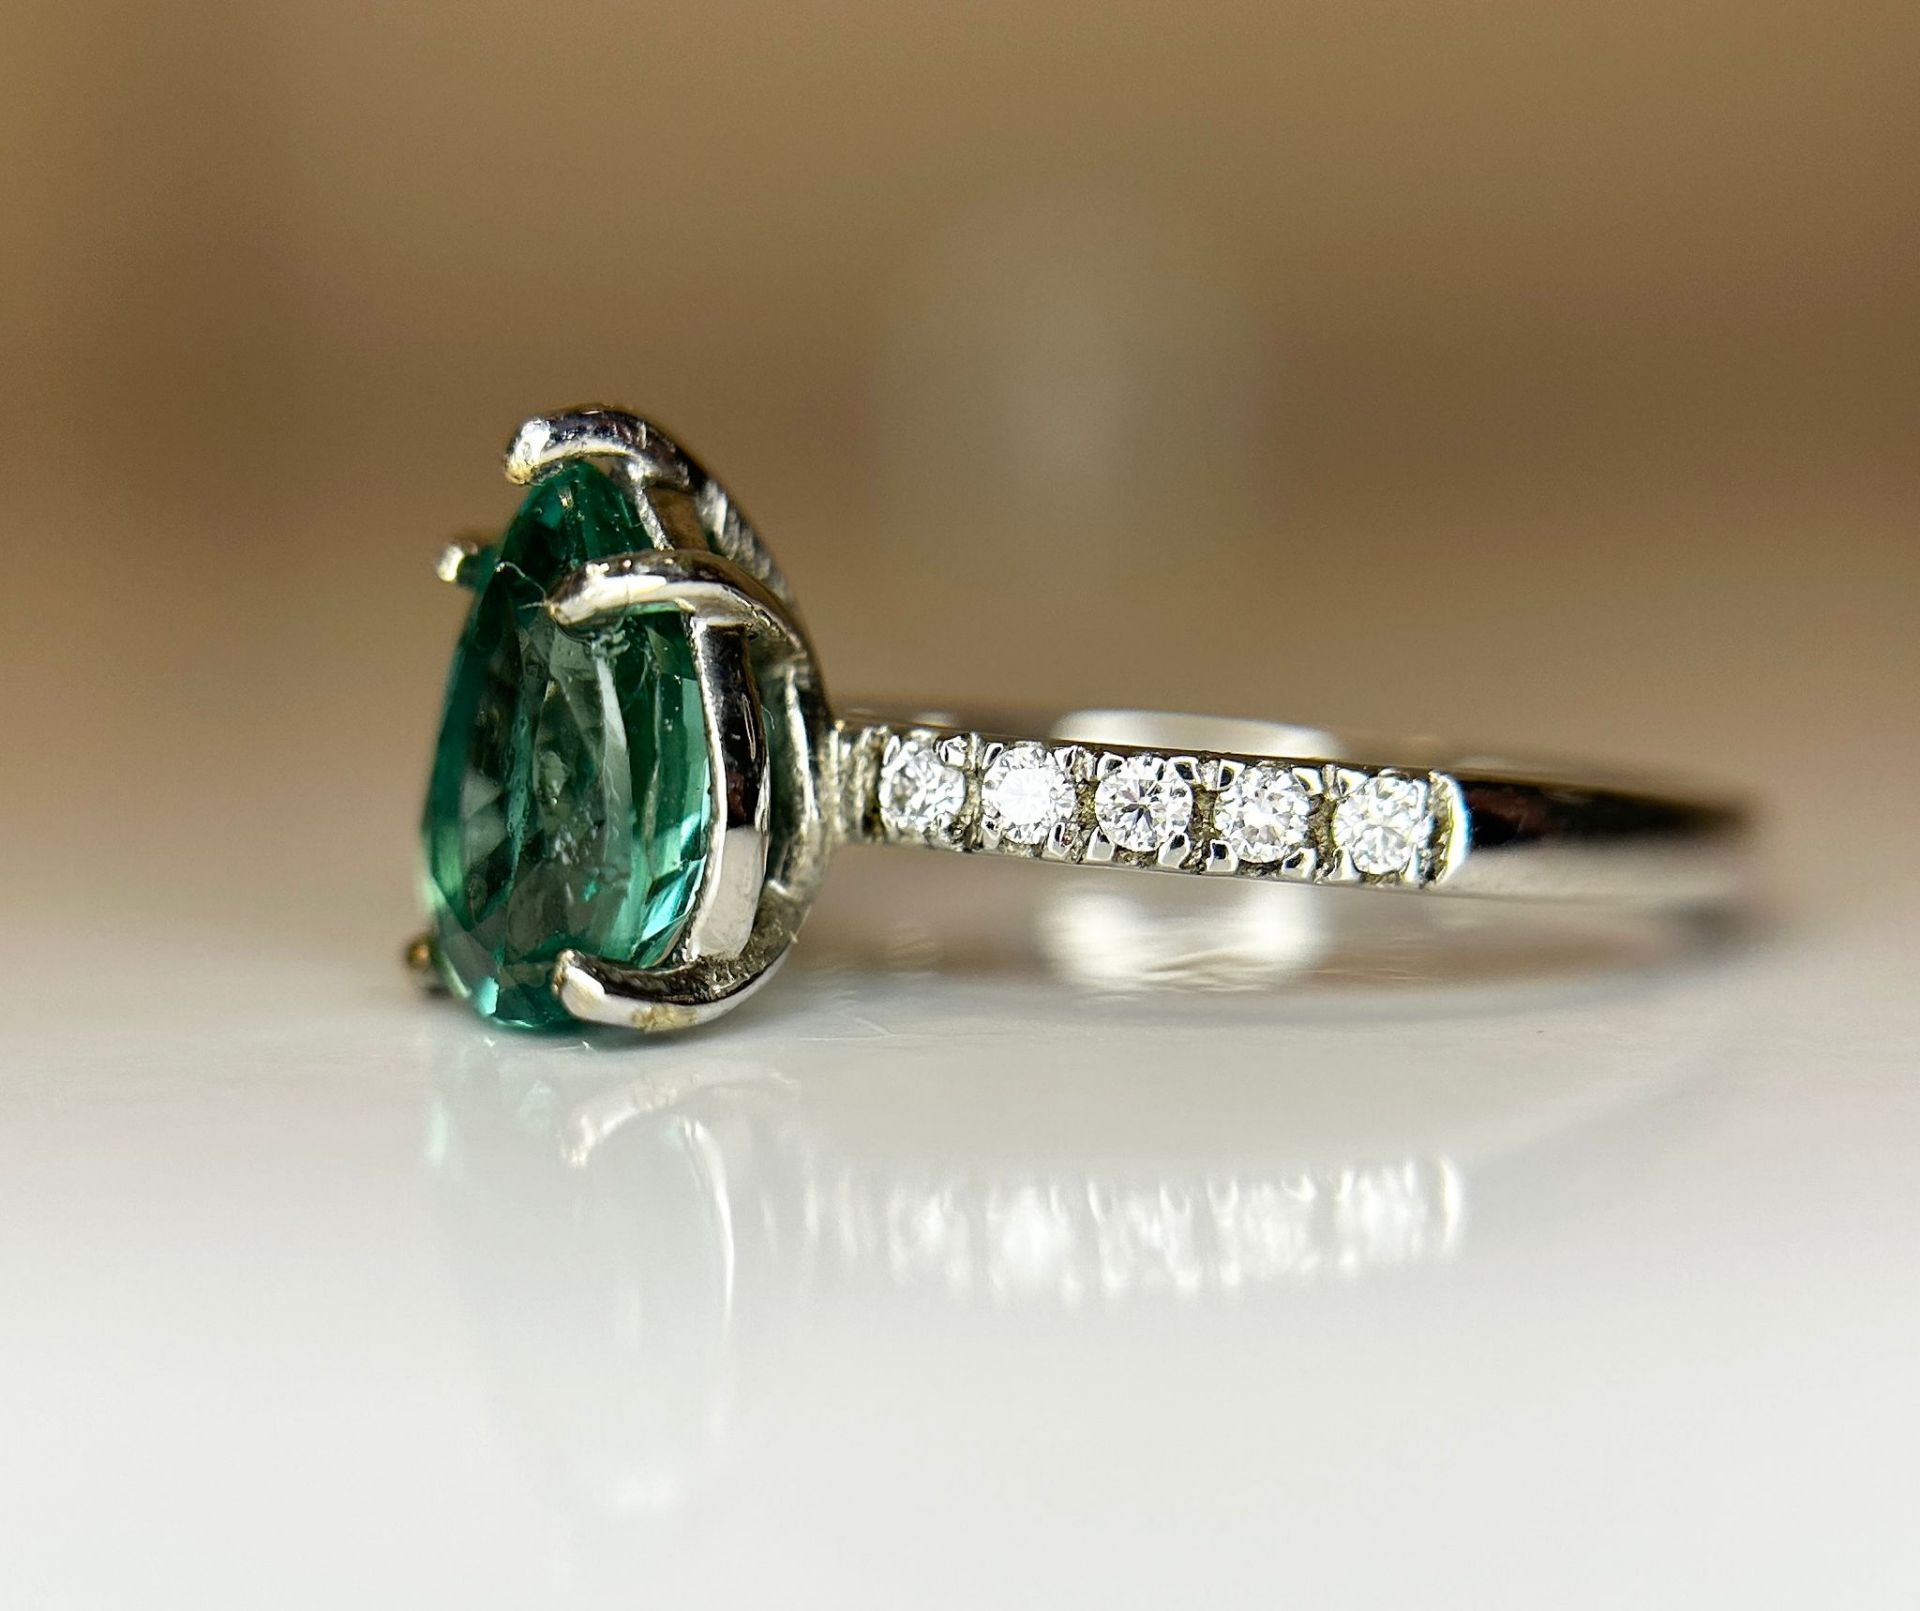 Beautiful Natural Emerald With Natural Diamonds & 18kGold